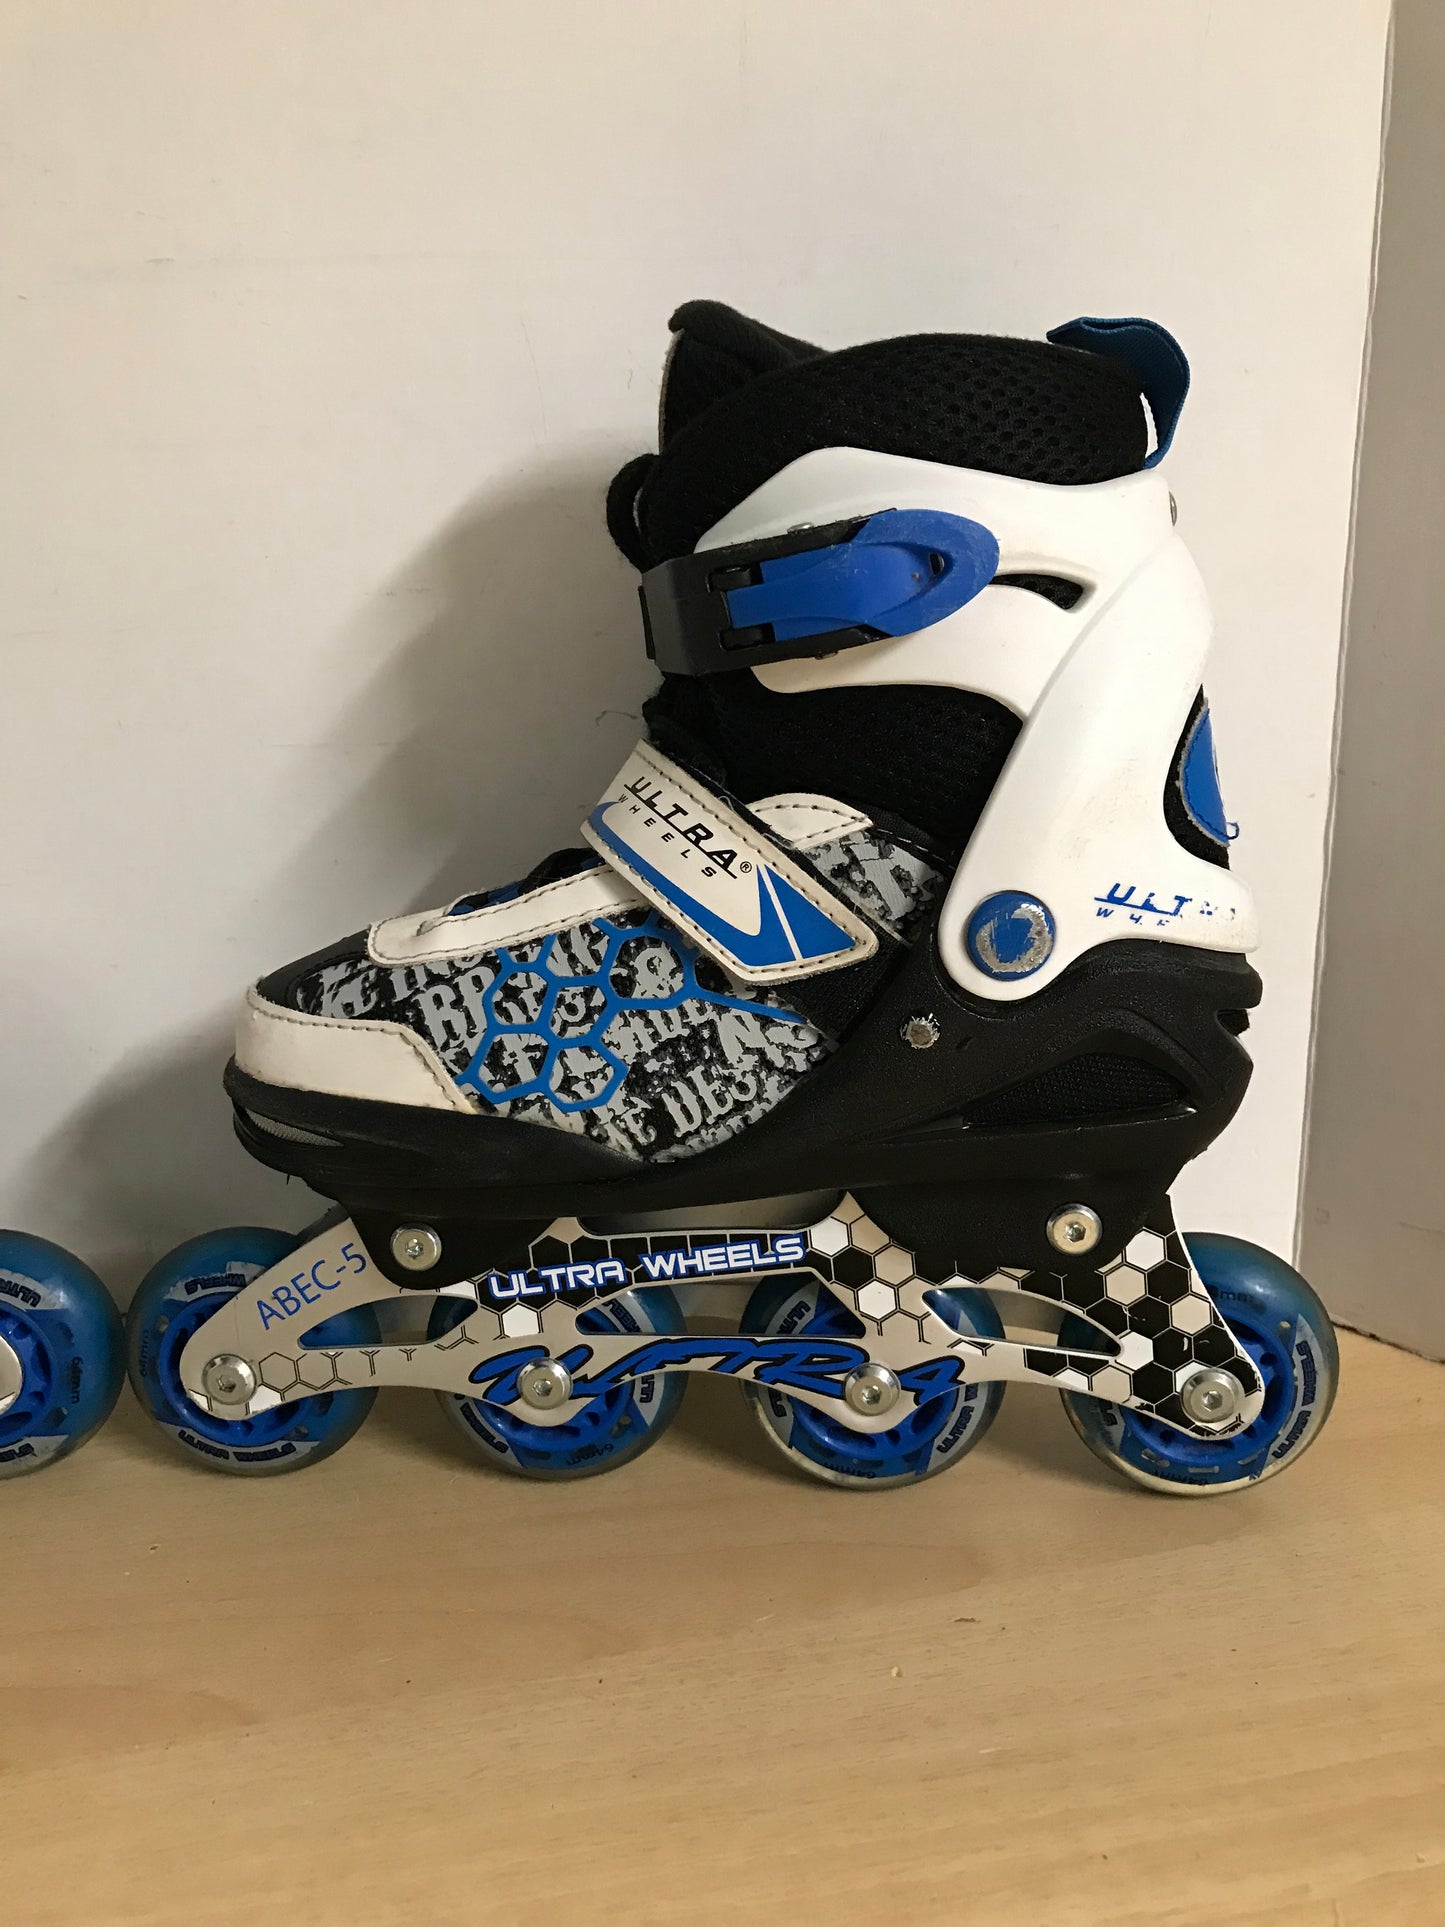 Inline Roller Skates Child Size 1-4 Adjustable Ultra Wheels Rubber Wheels Blue White Black